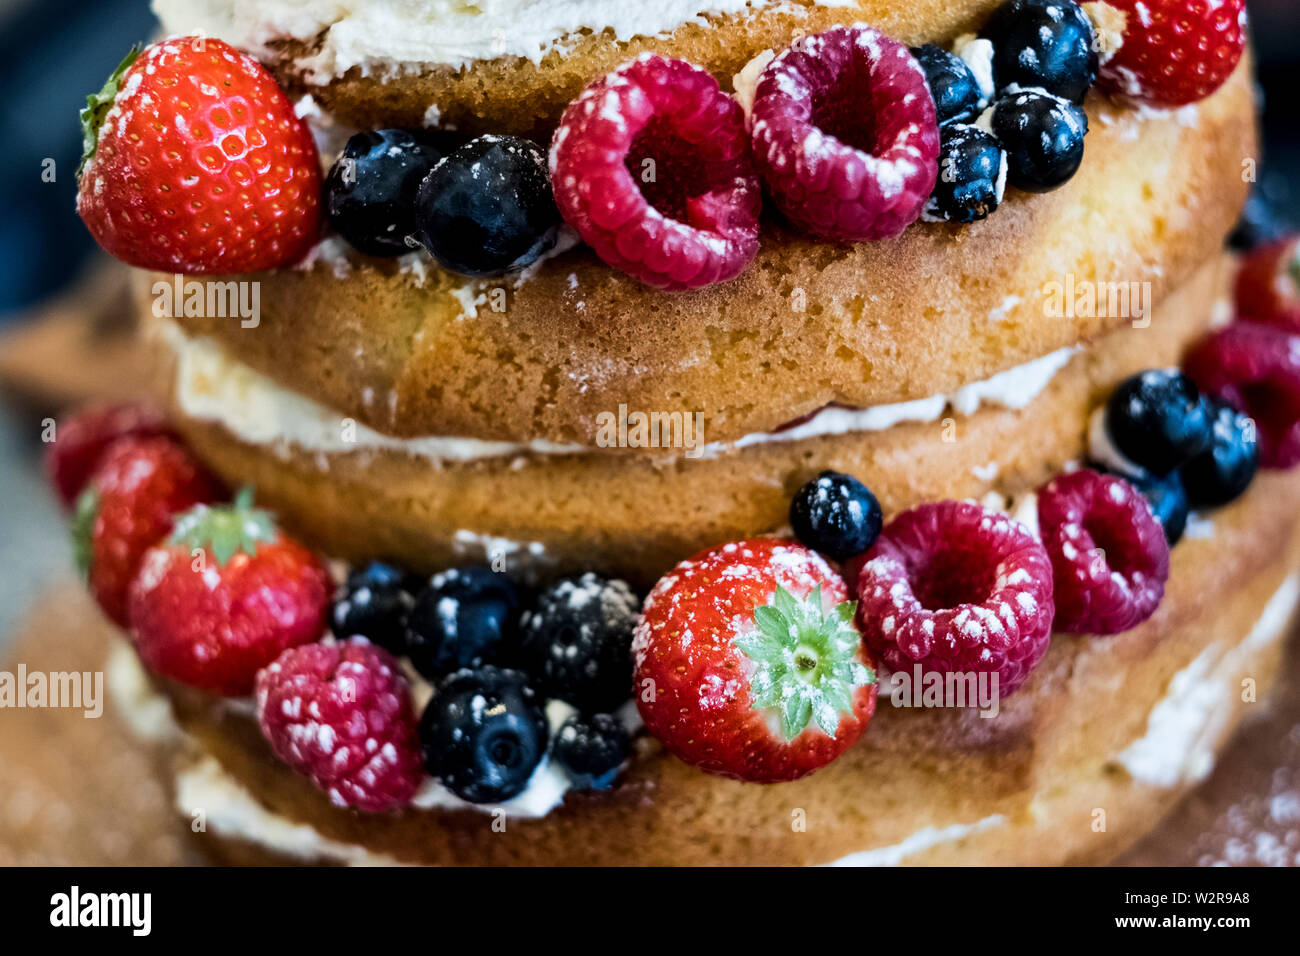 Close up of a freshly baked sponge cake layered with fresh cream and fresh fruit. Stock Photo